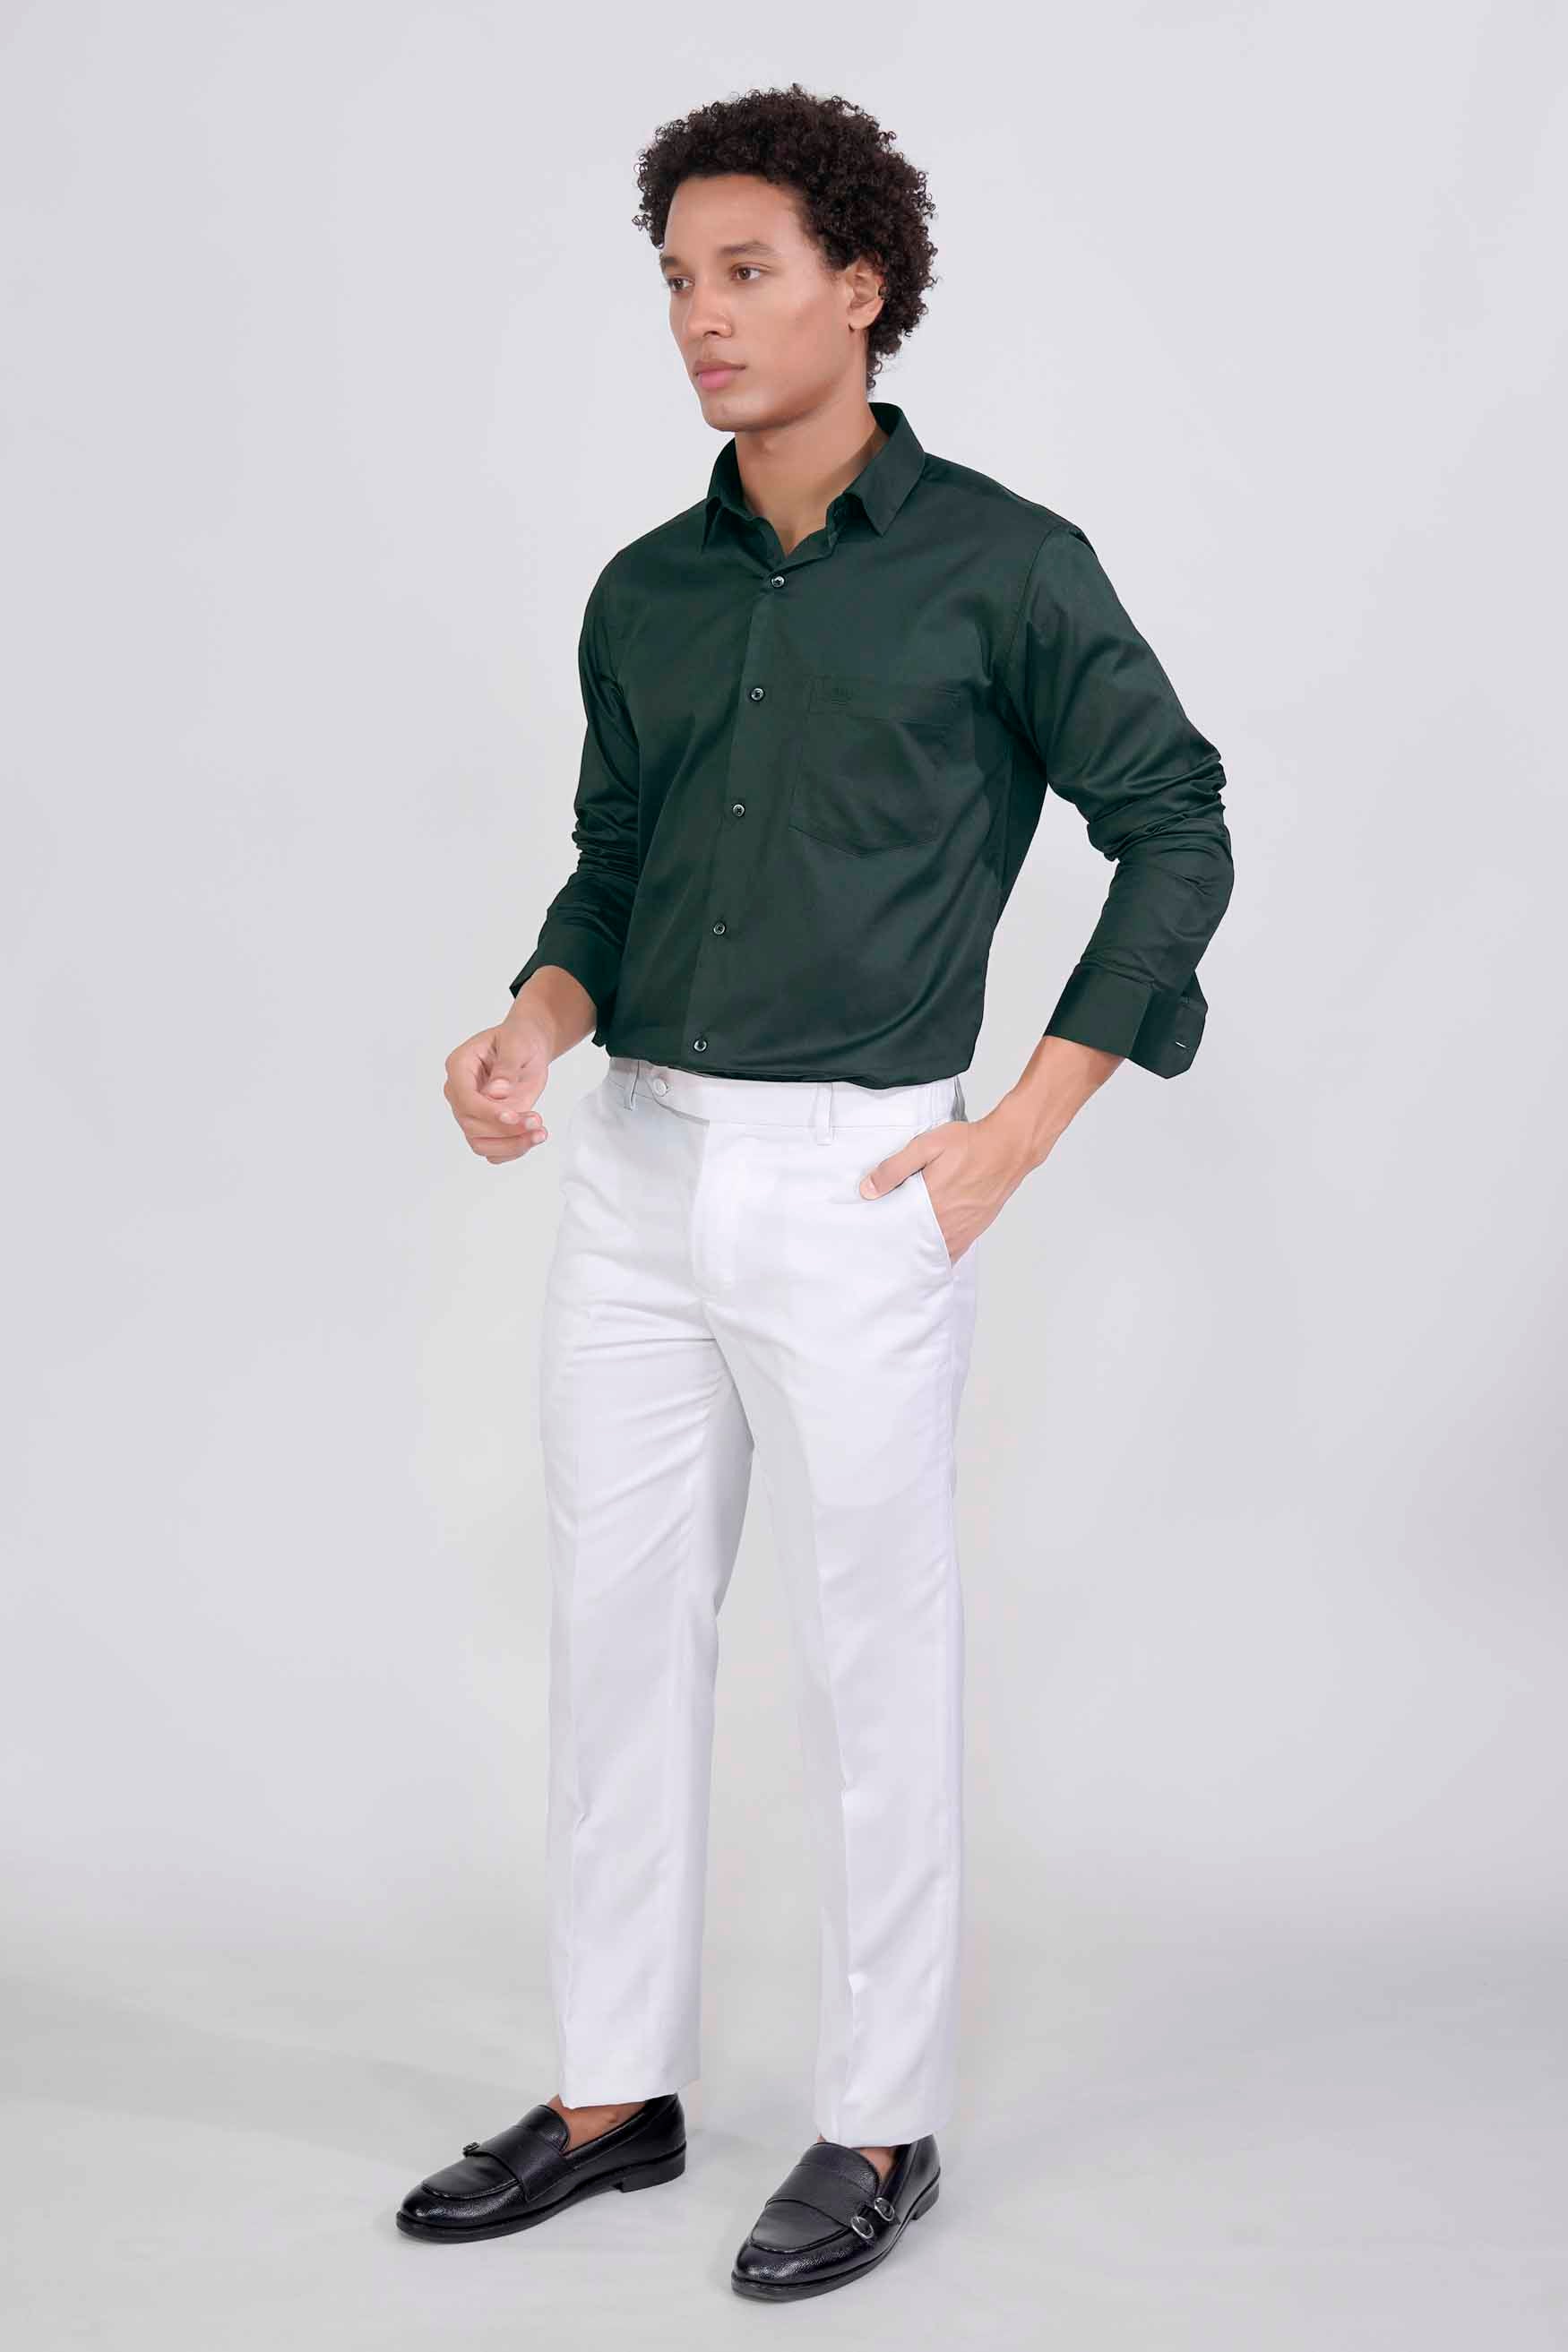 Burnham Green Subtle Sheen Super Soft Premium Cotton Shirt